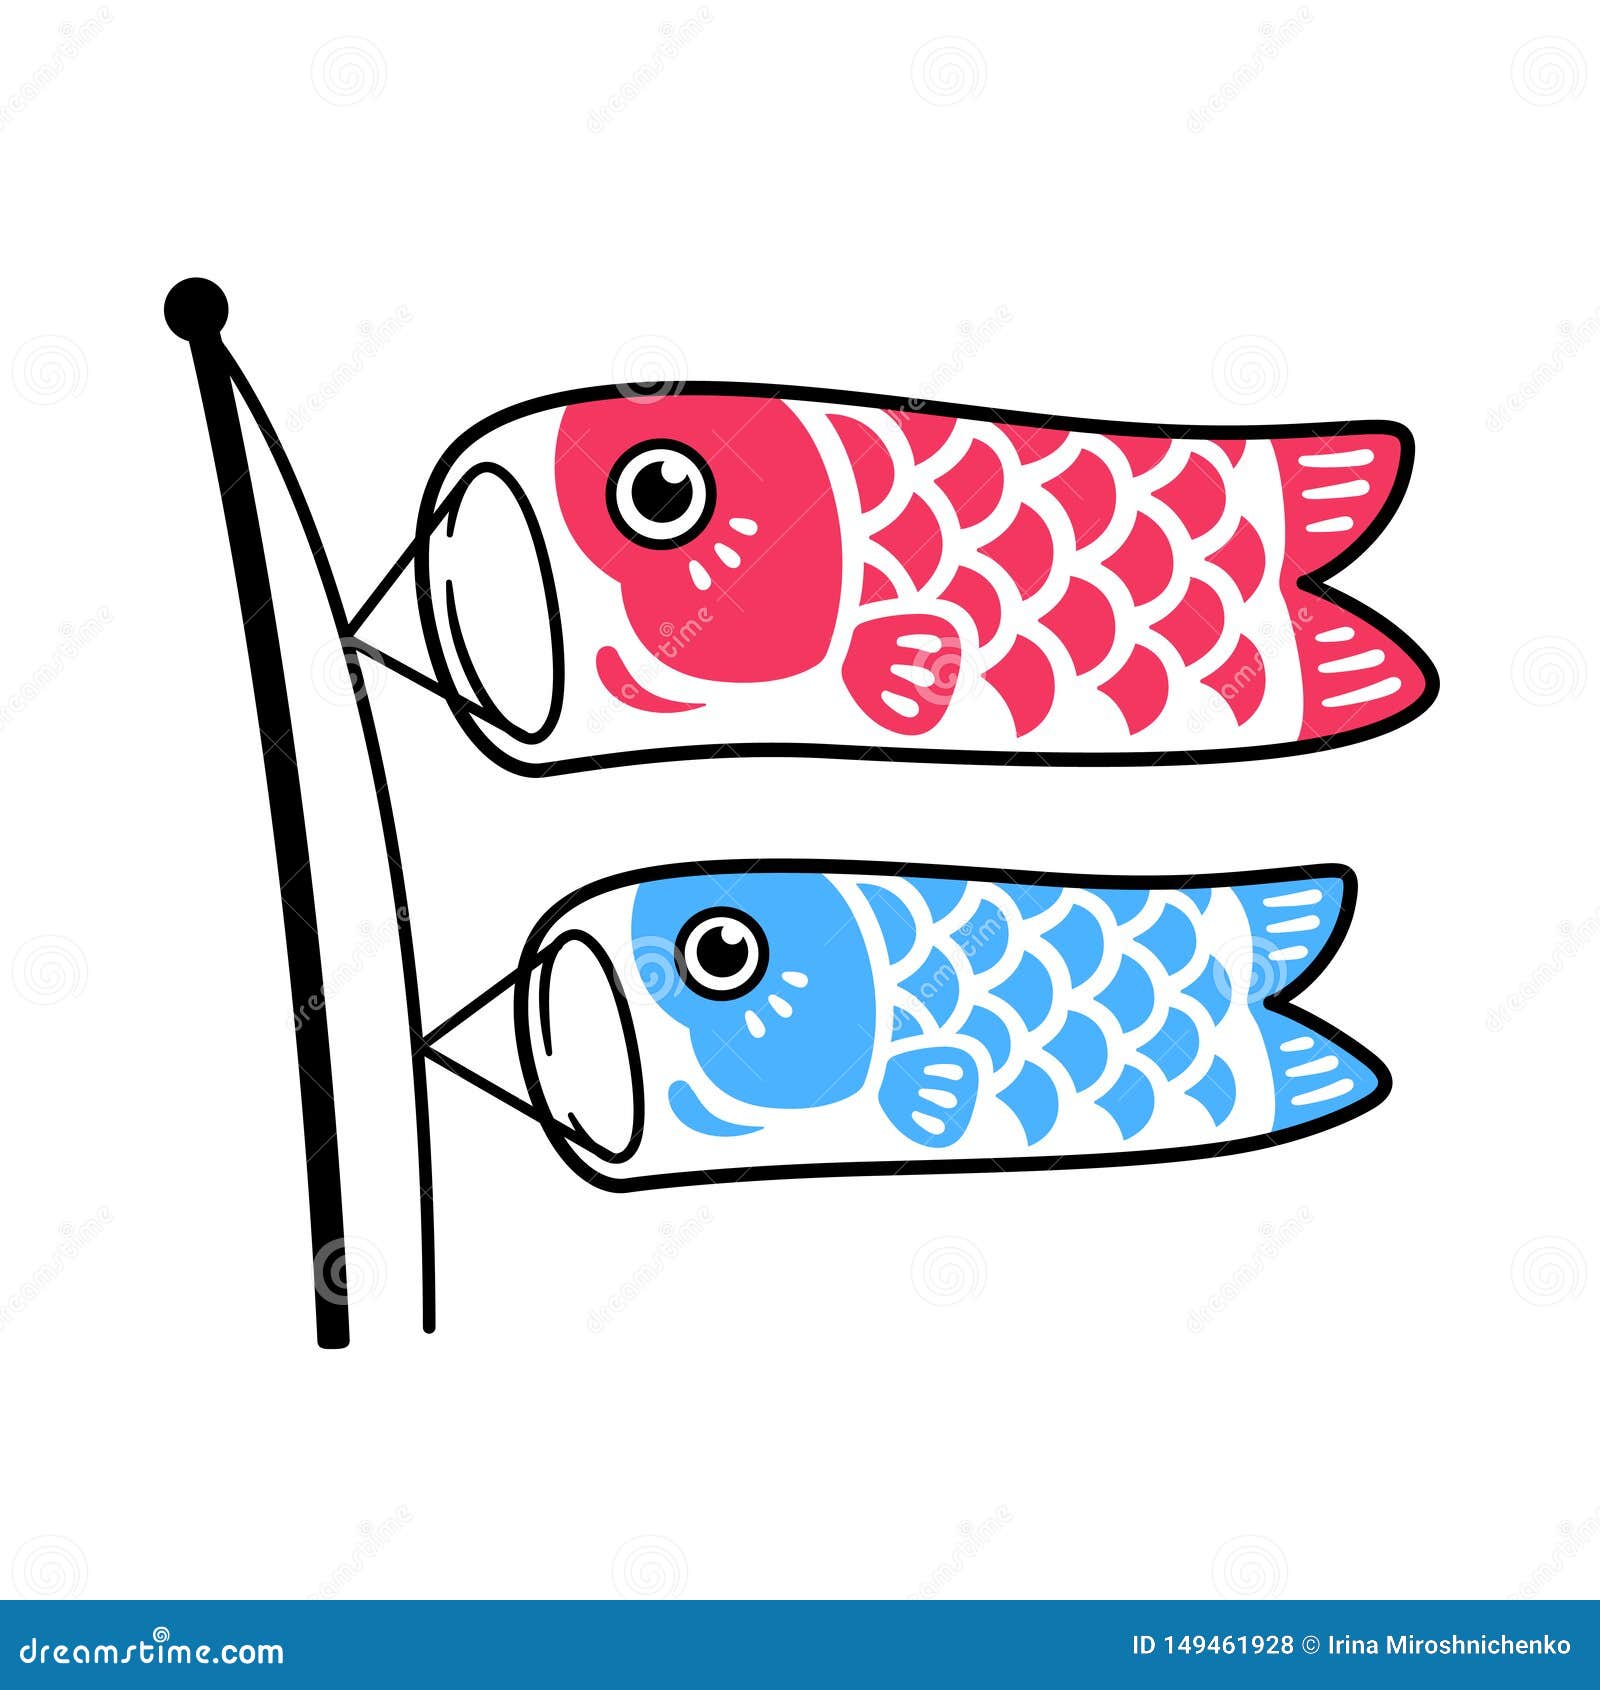 Koinobori fish flag stock vector. Illustration of kawaii - 149461928